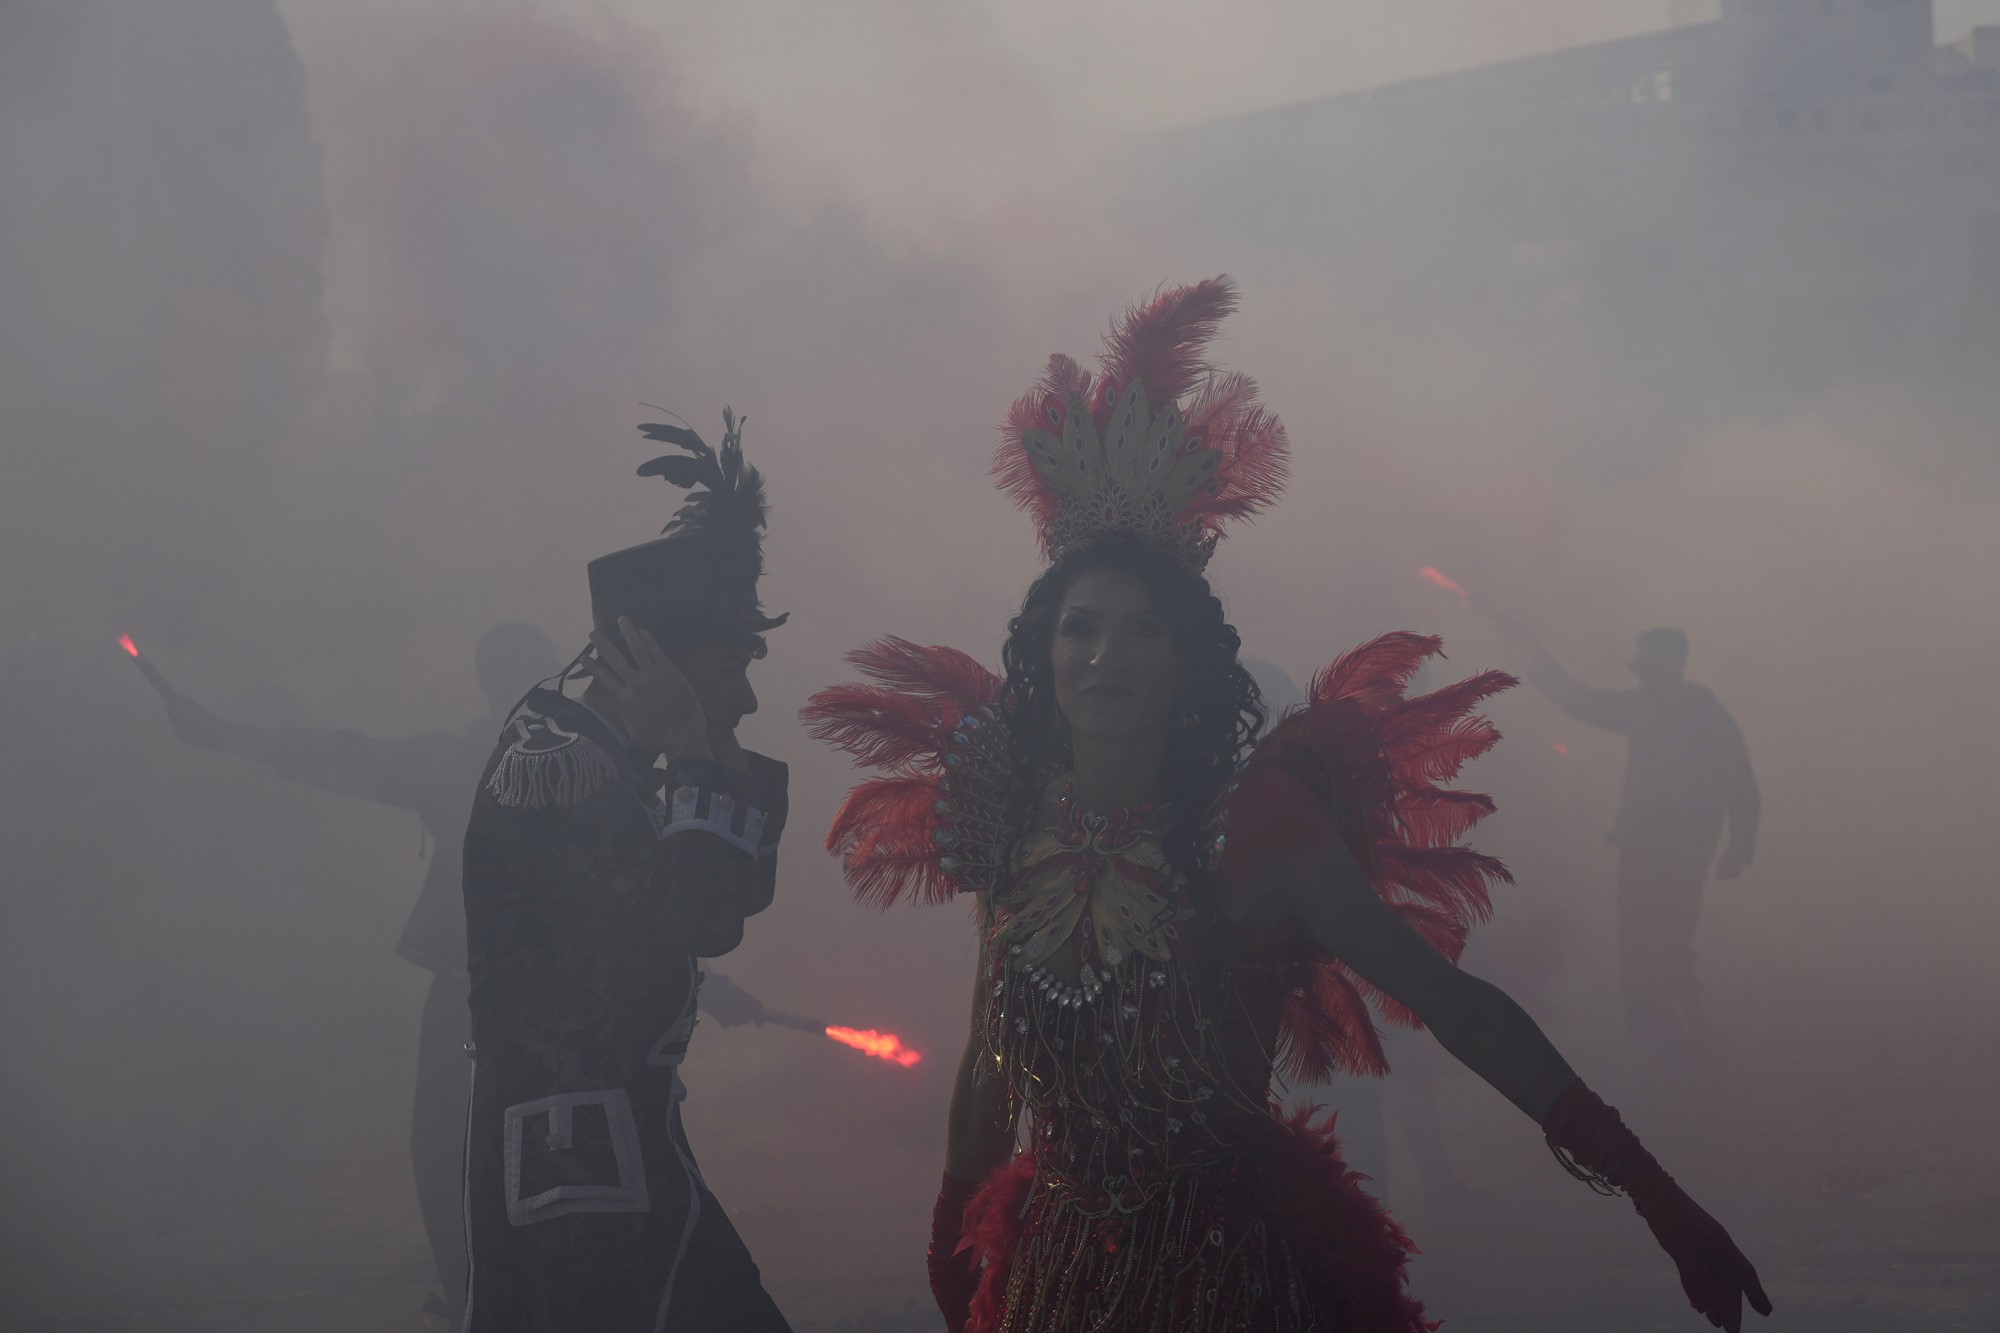 A man and woman wearing carnival costumes  dance amid smoke.